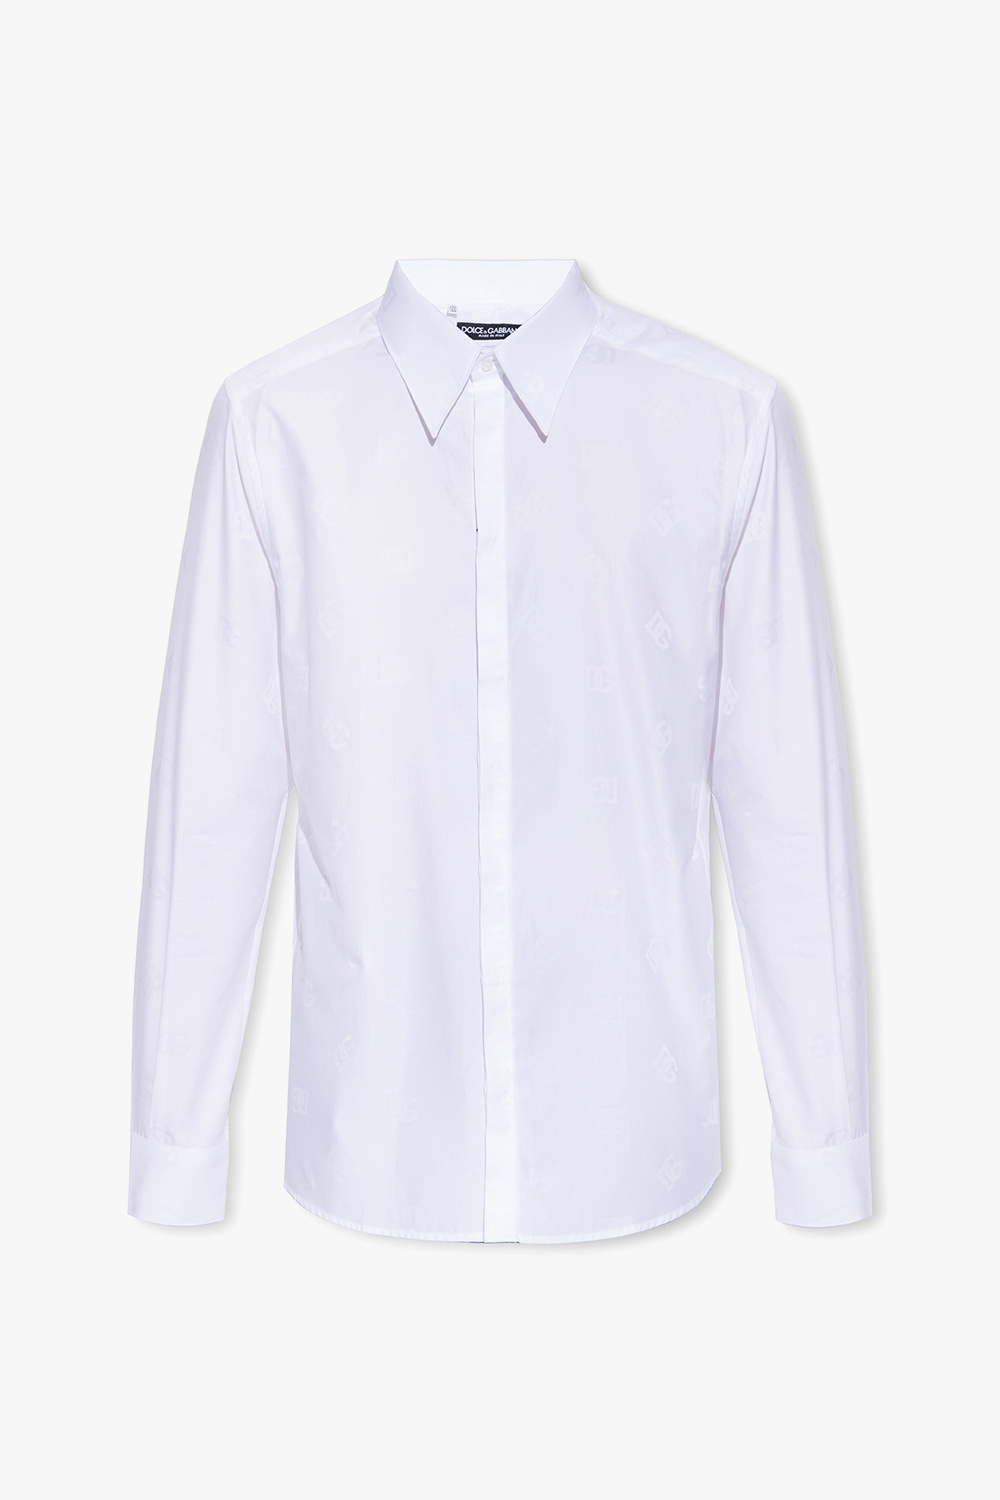 Dolce & Gabbana Monogrammed shirt